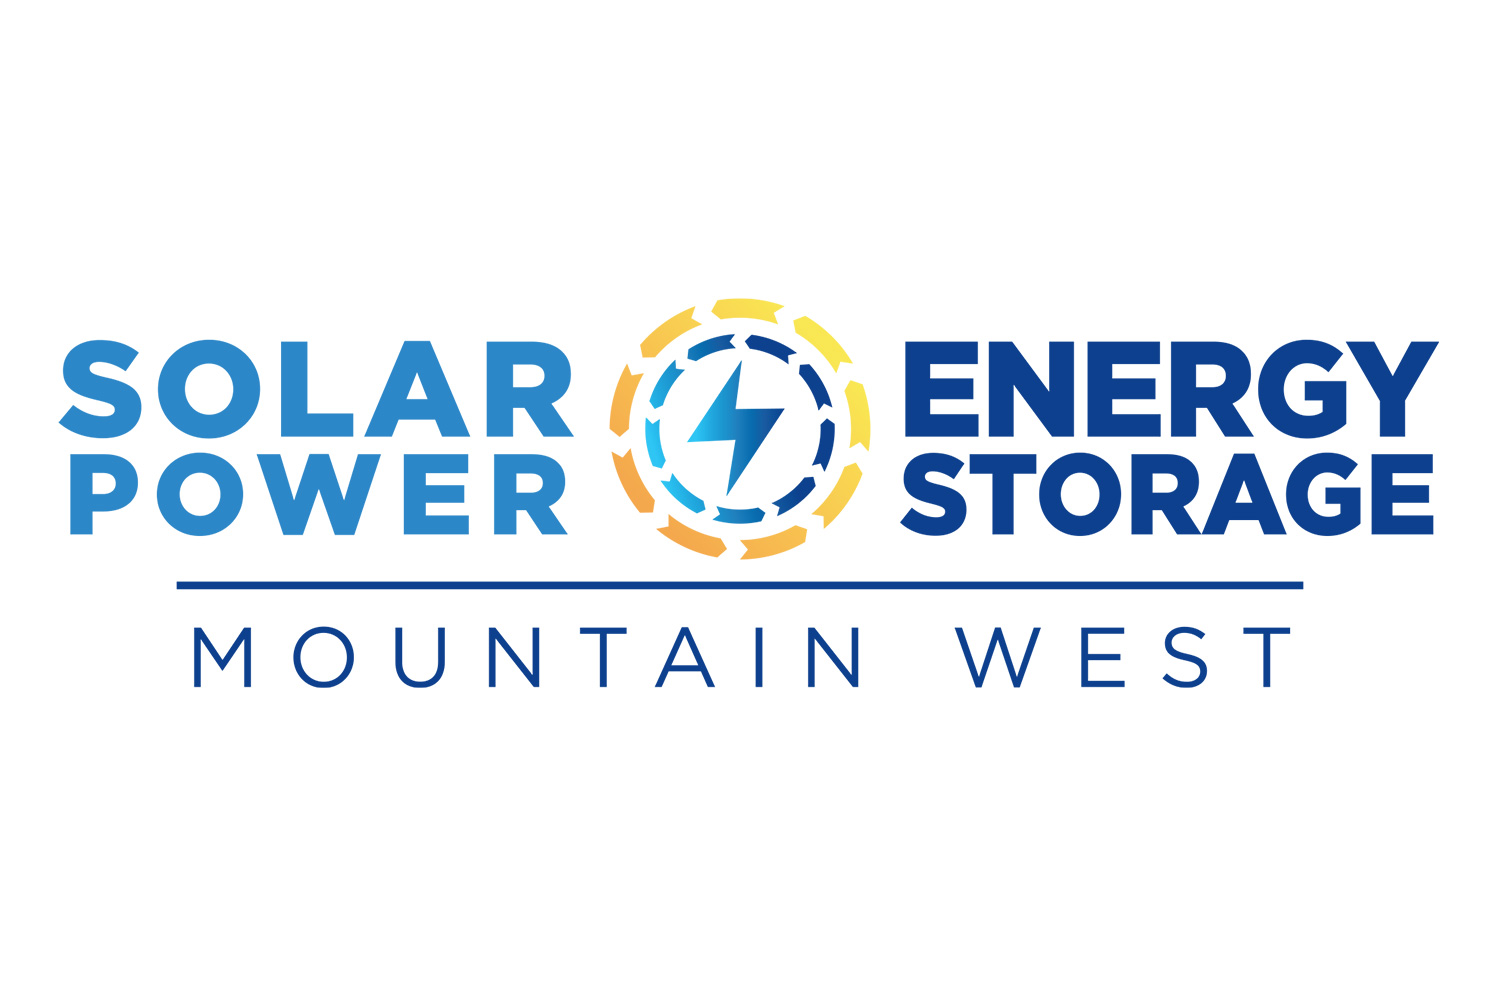 Solar Power Energy Storage Mountain West